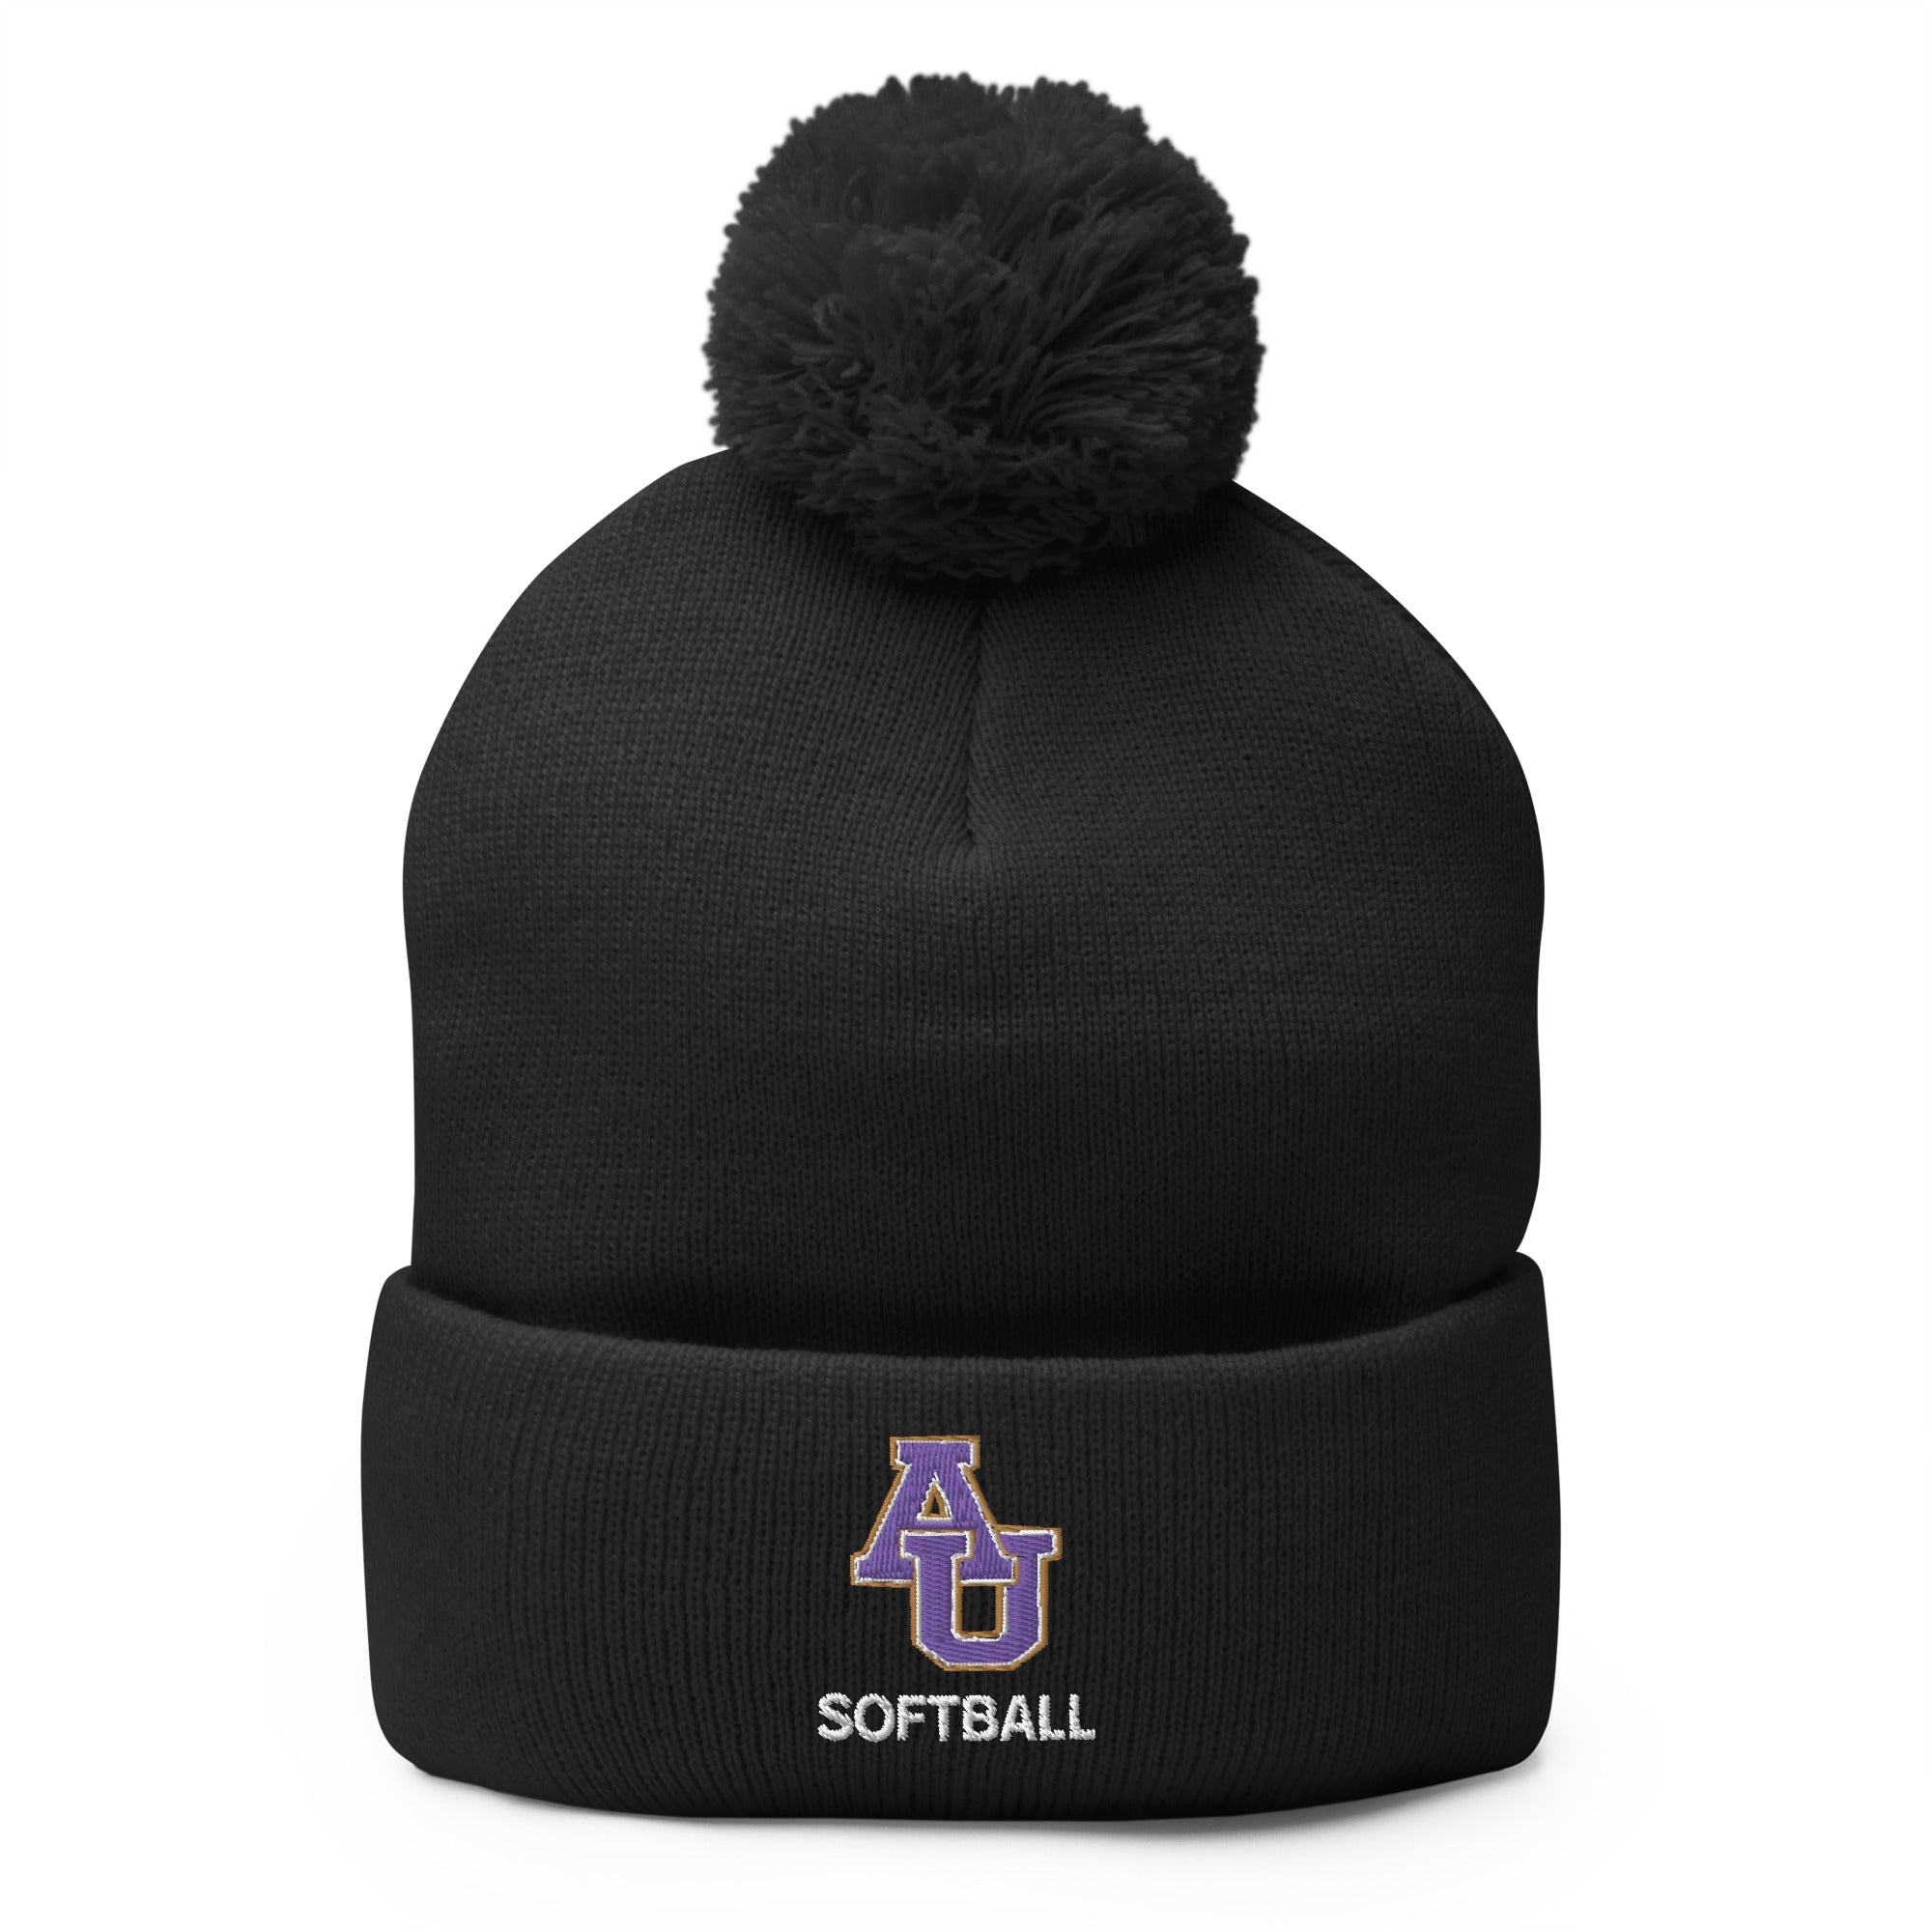 Avila Softball Pom-Pom Knit Cap